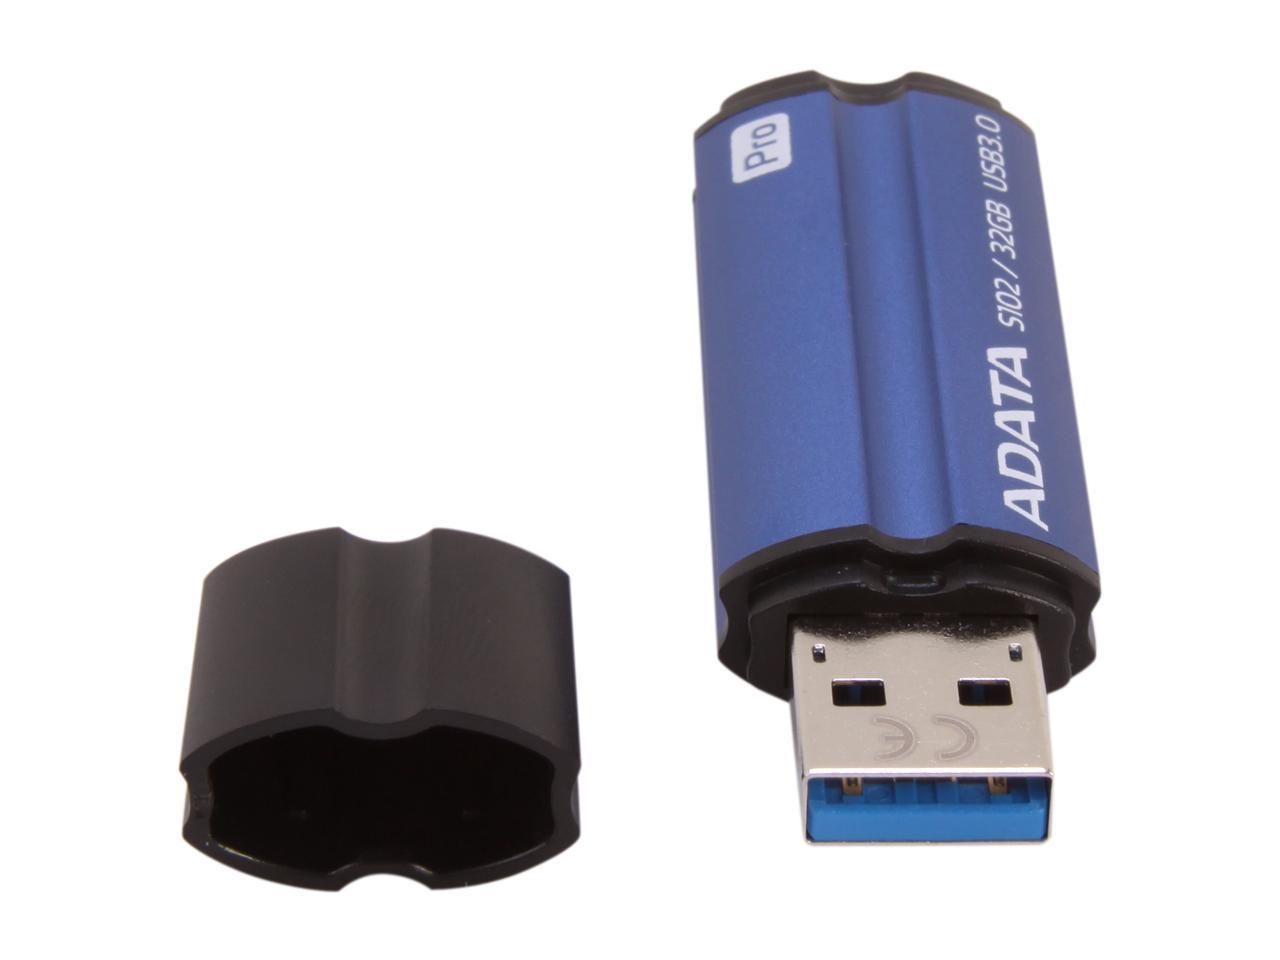 ADATA 32GB S102 Pro Advanced USB 3.0 Flash Drive, Speed Up to 100MB/s (AS102P-32G-RBL)